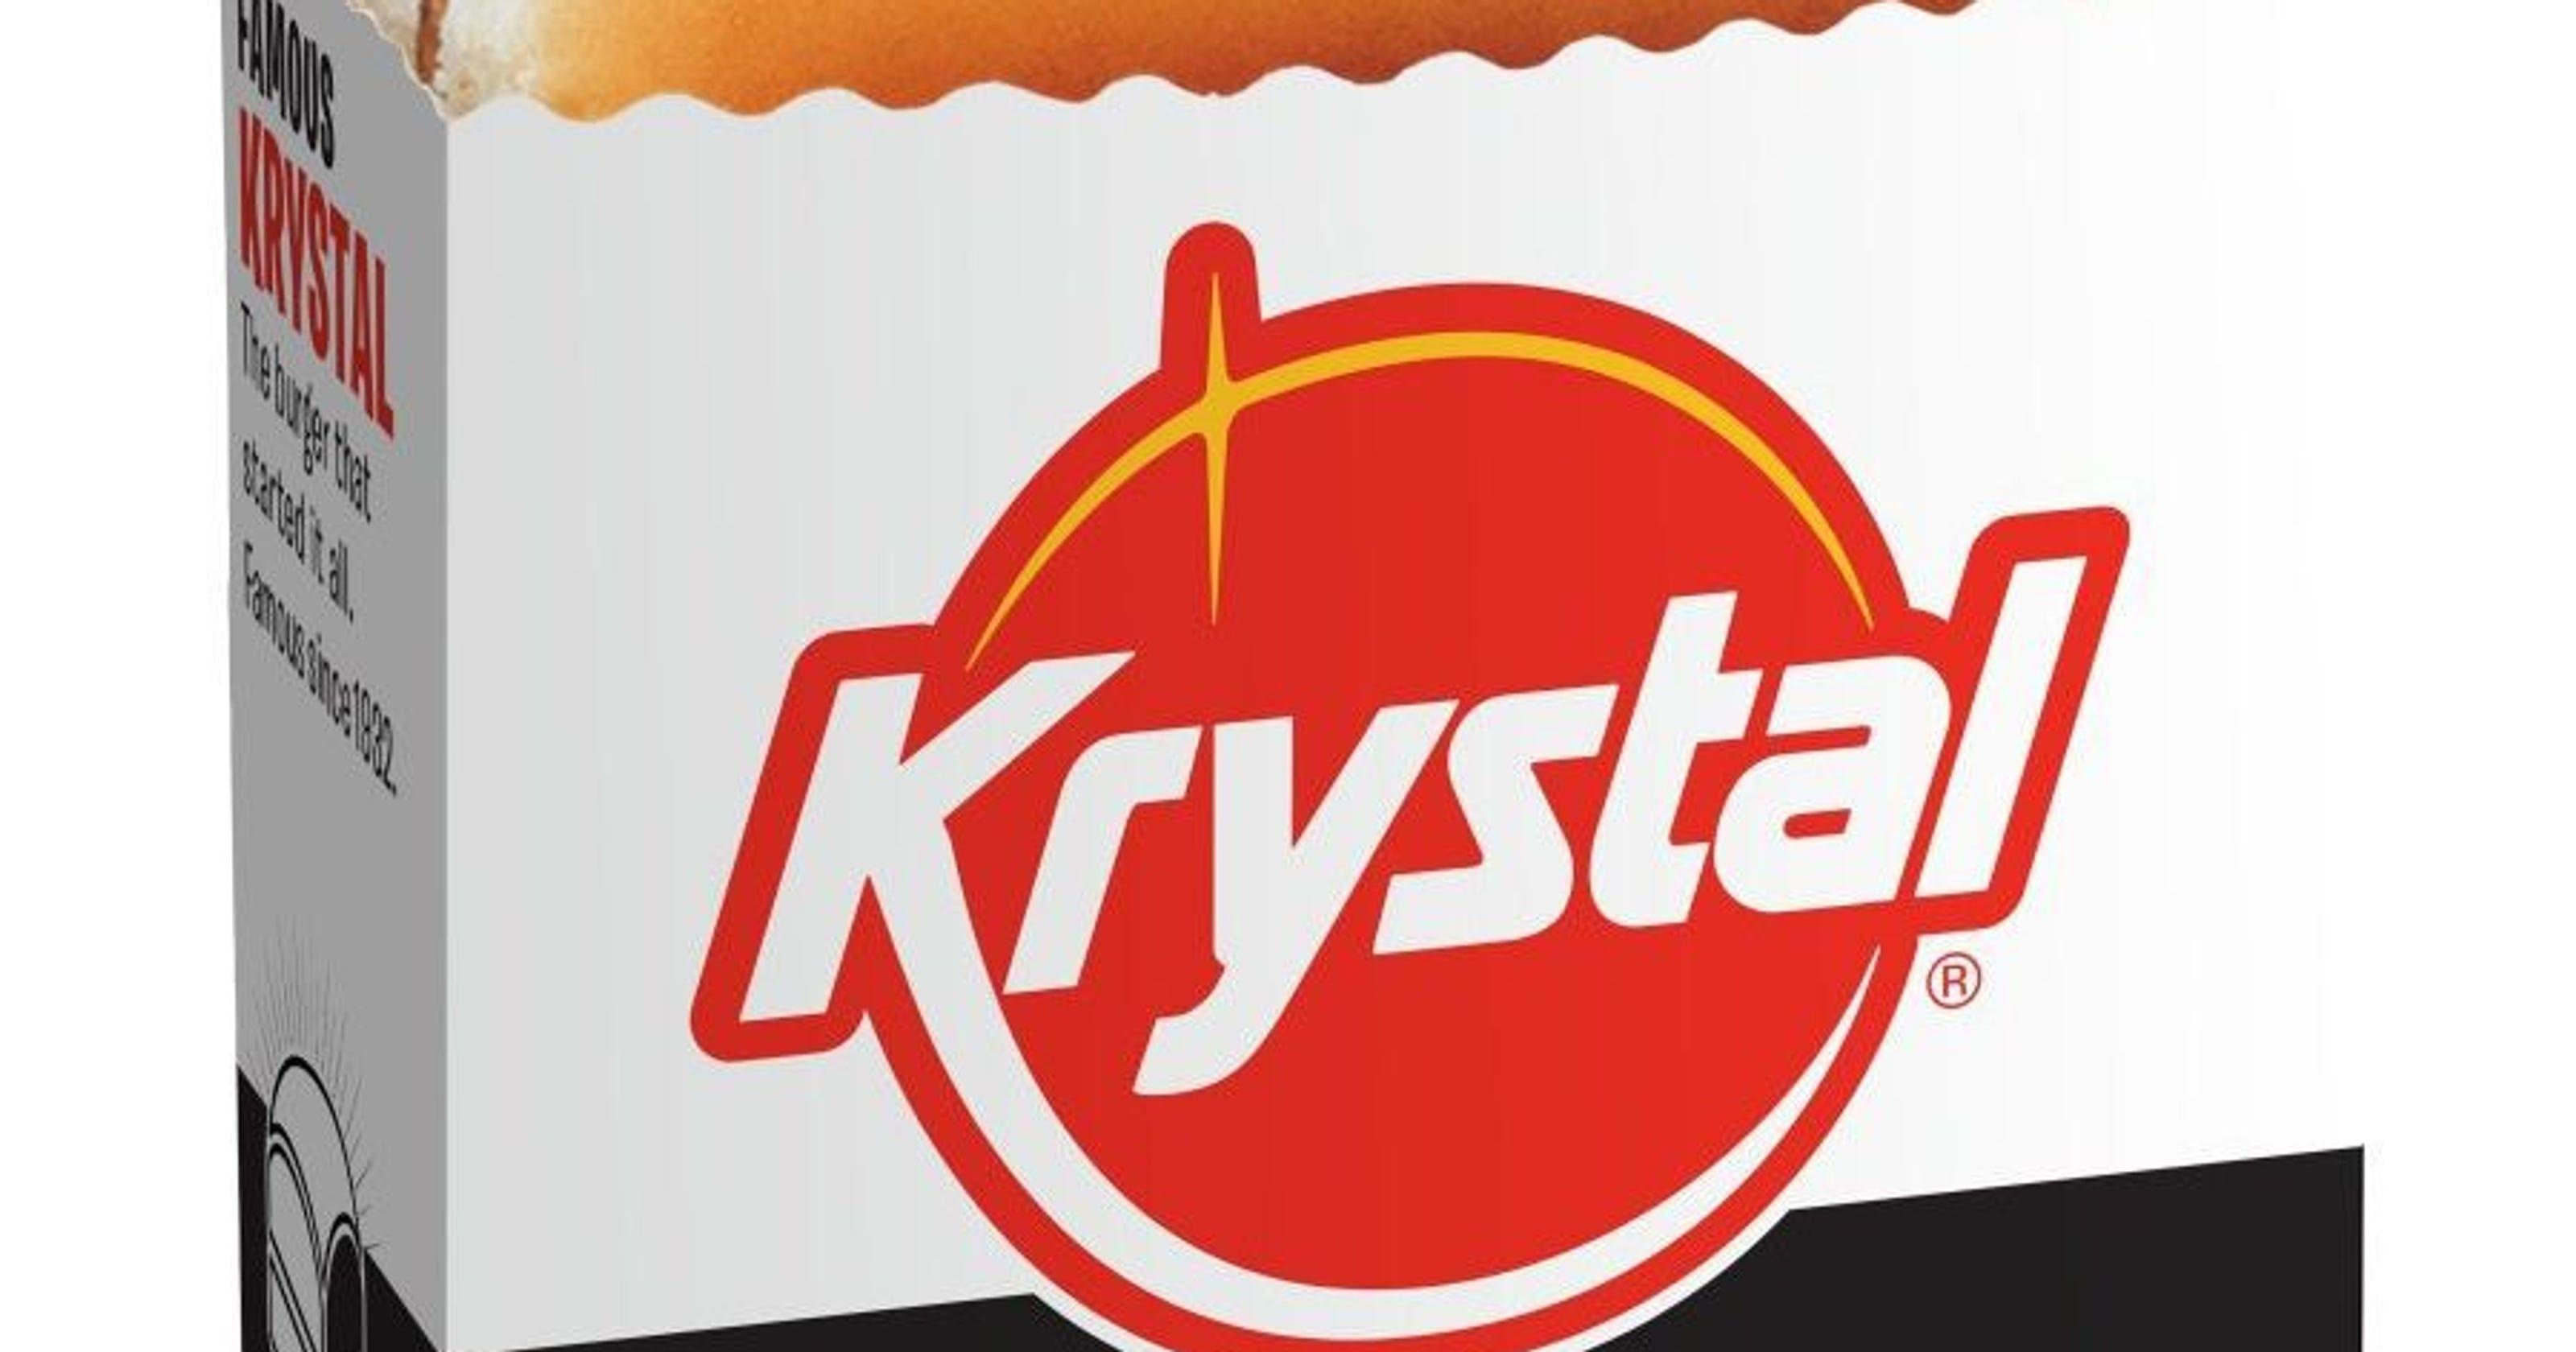 Krystal Logo - Krystal burger happy hour daily from 2-5 p.m